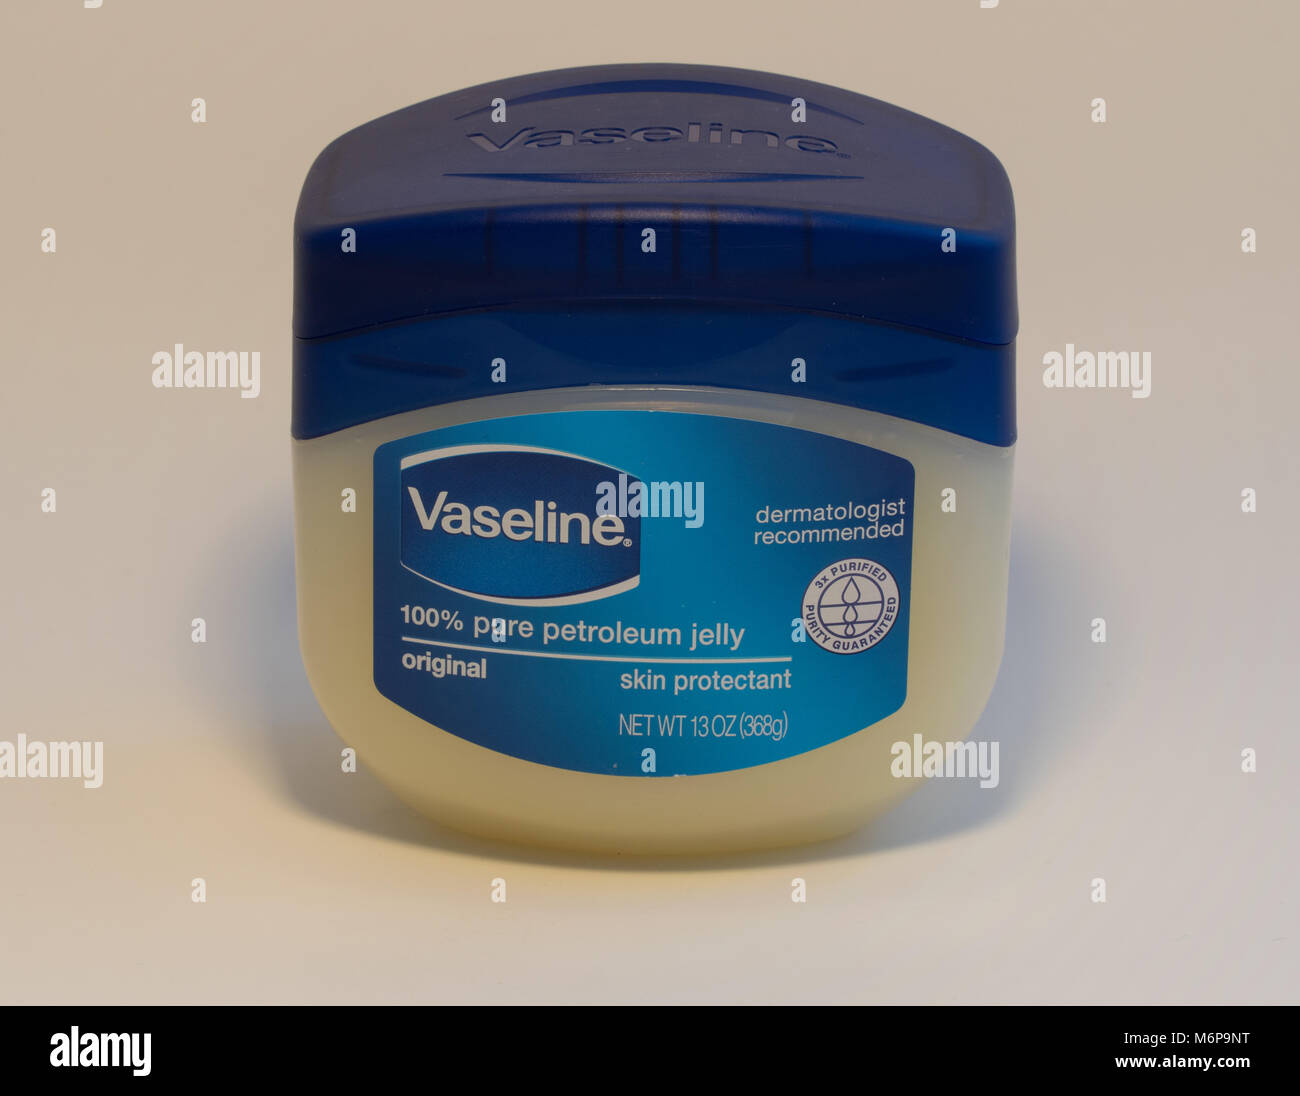 United States, Circa 2018: Vaseline Vaseline Whirlpool Produkt erschossen. Illustrative editorial Foto Stockfoto